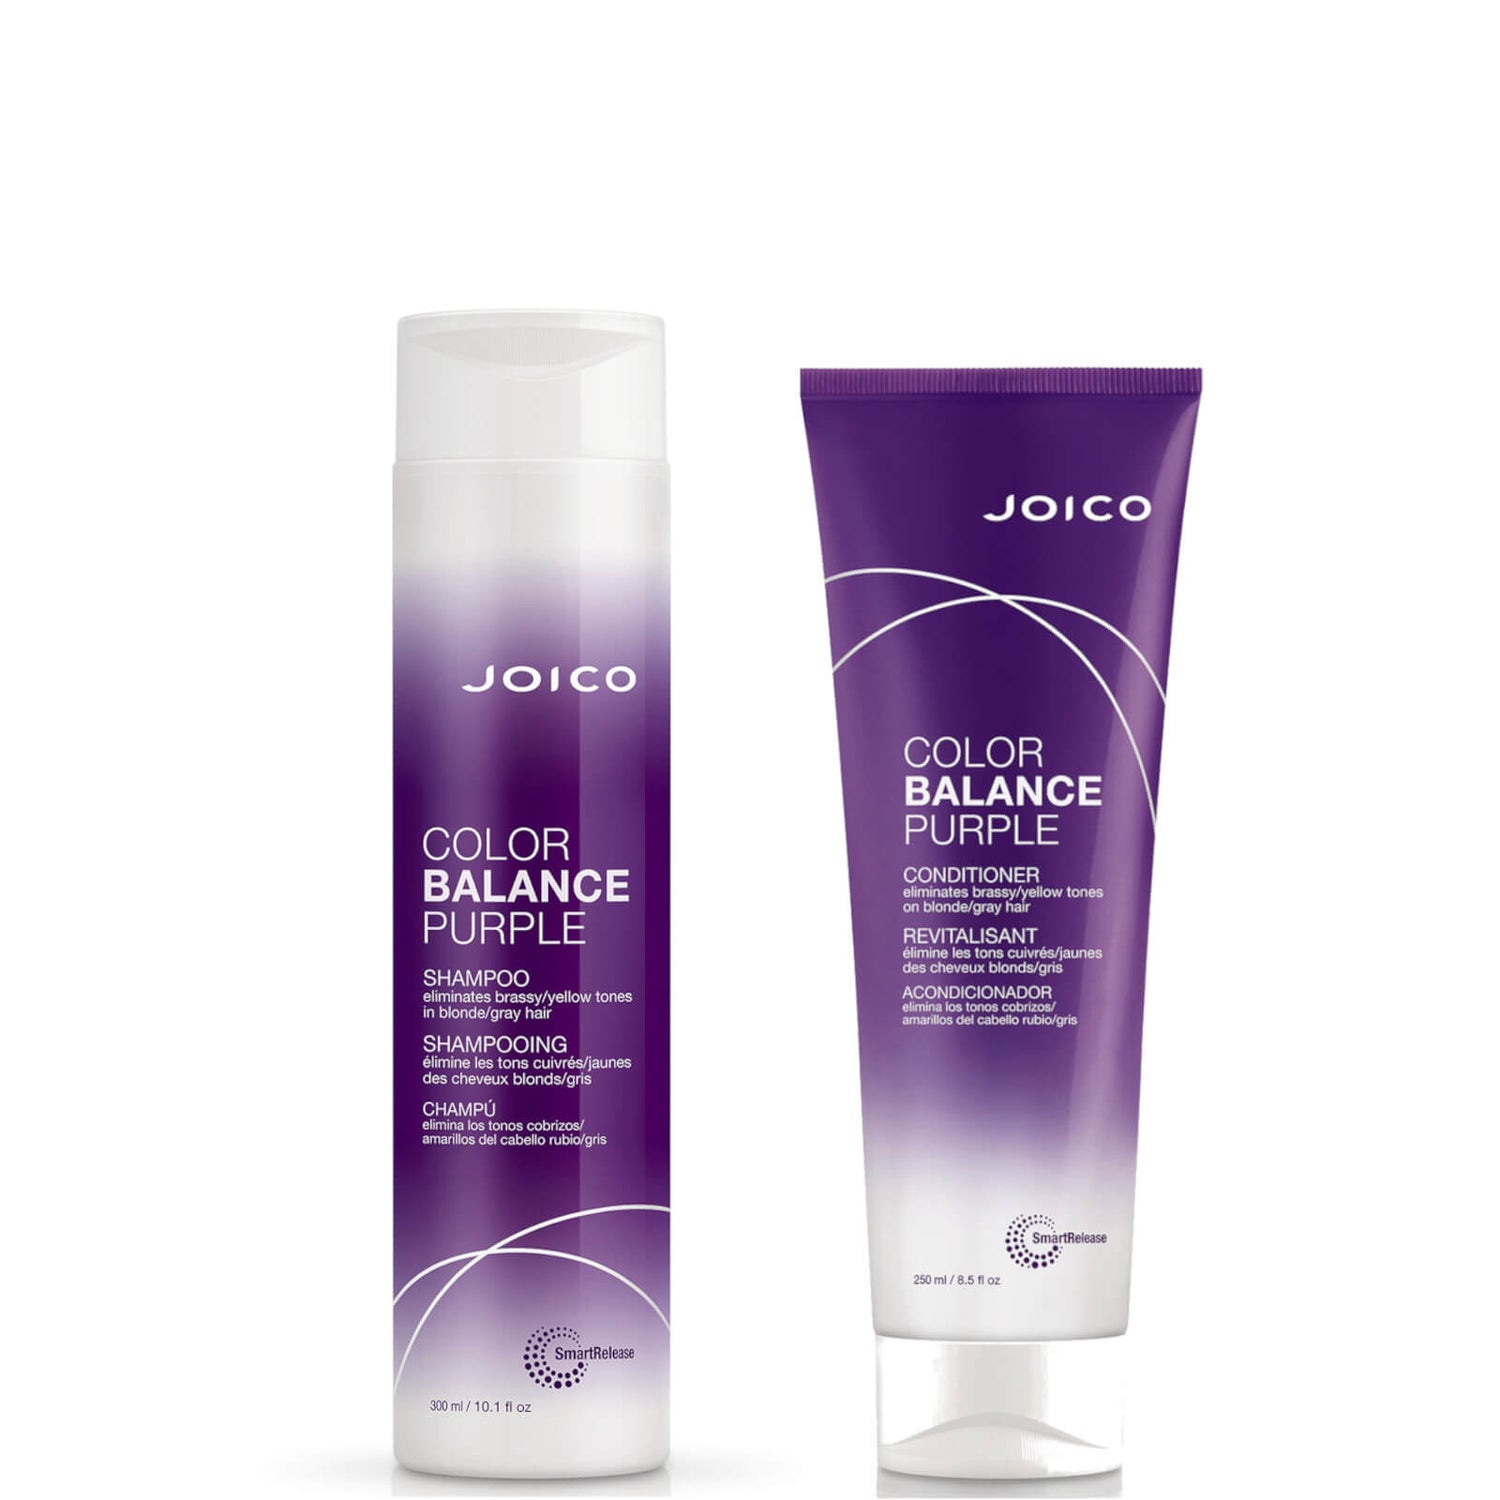 Joico Color Balance Purple Shampoo and Conditioner (2 x 300ml)